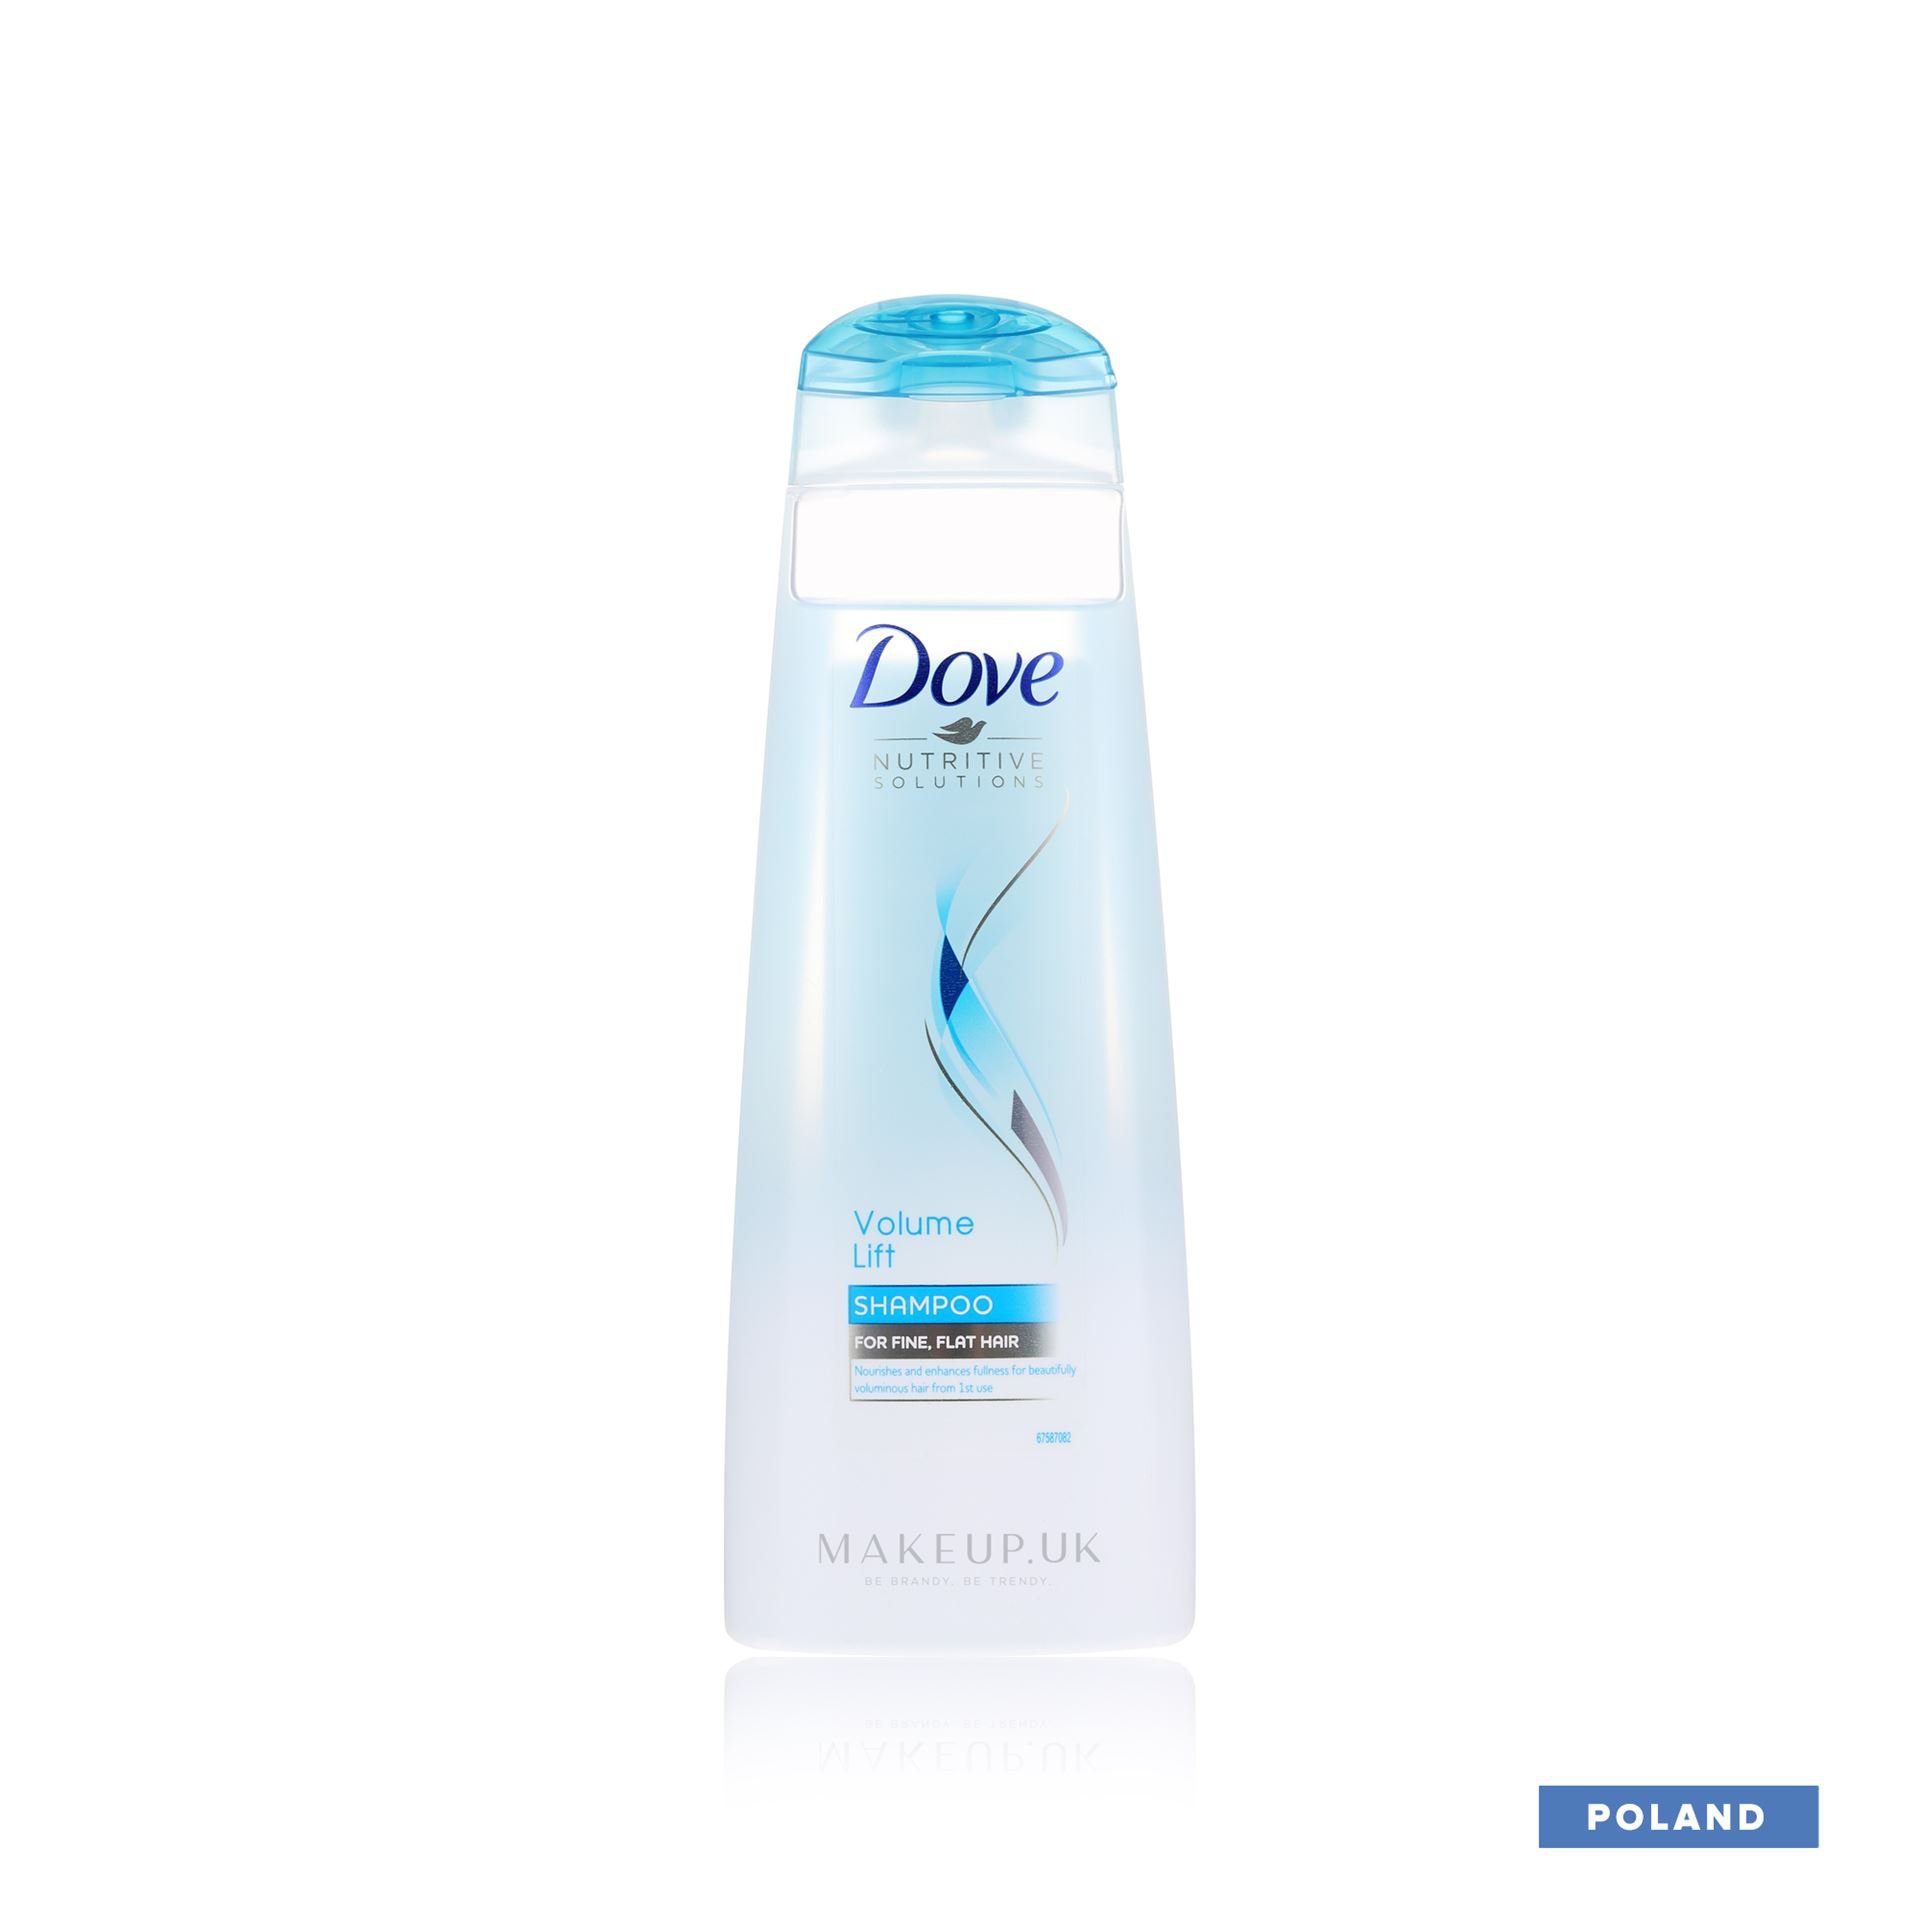 Dove Volume Lift Hair Shampoo | MARKETPLACE